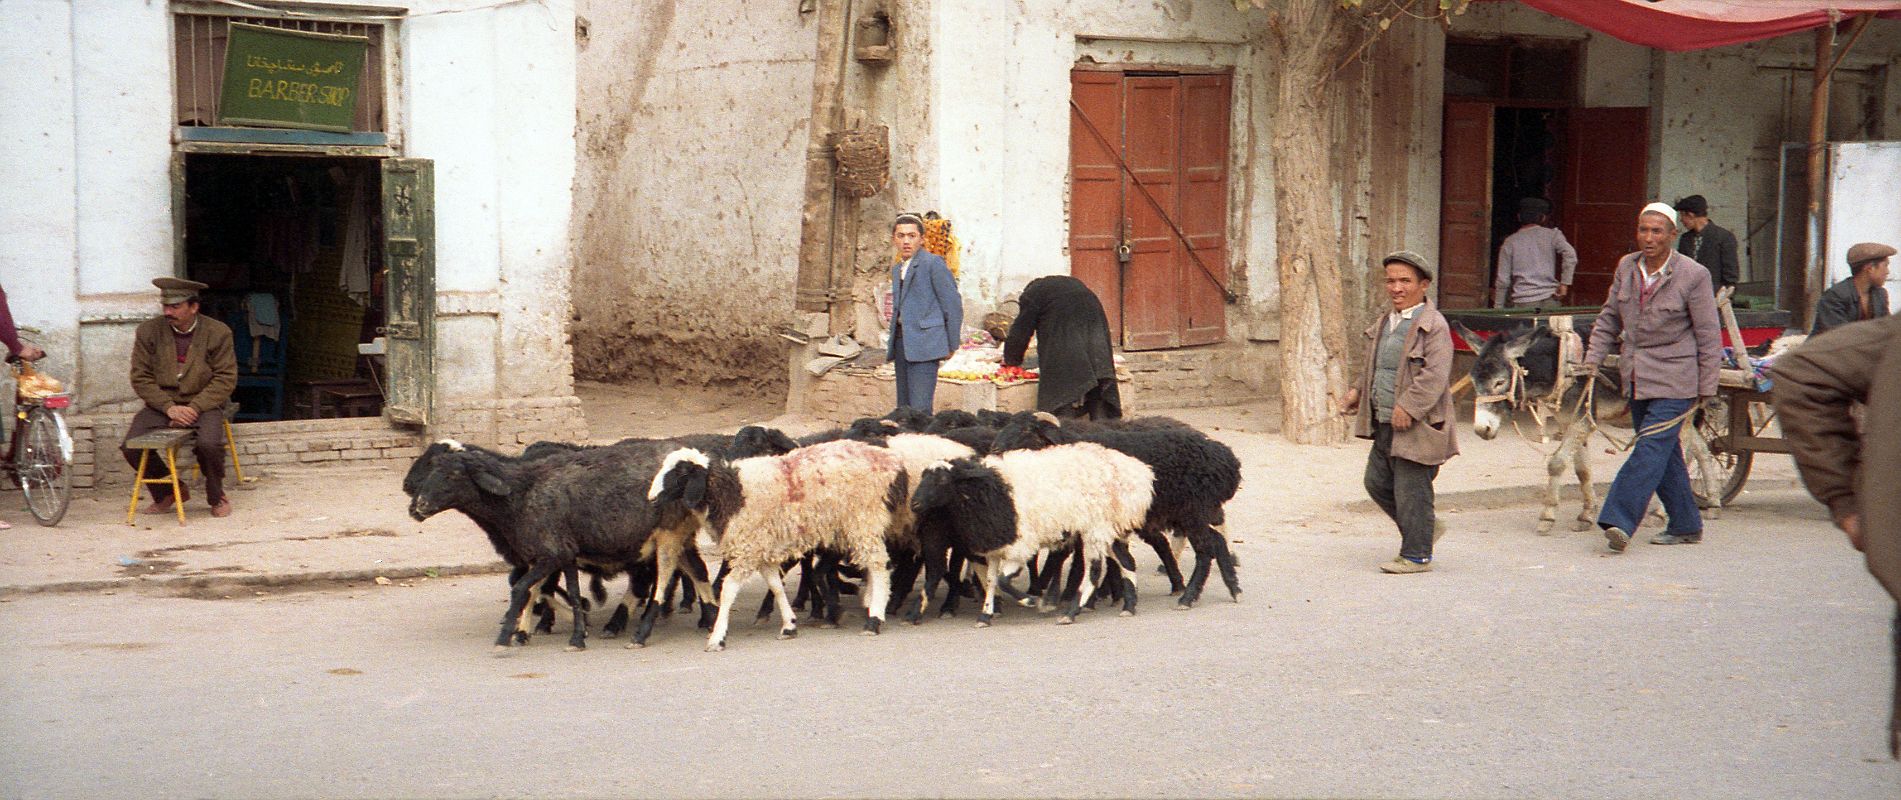 12 Kashgar Old City Street Scene 1993 Shepherd And His Sheep